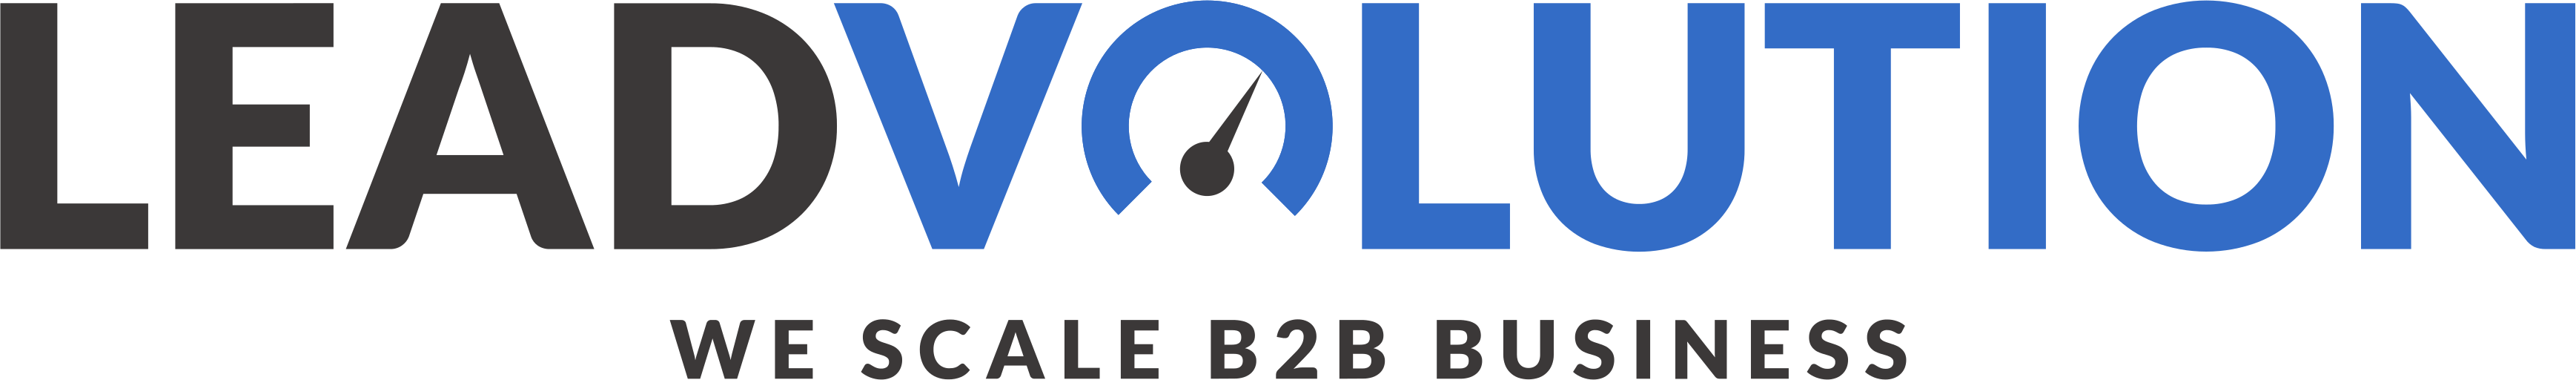 Logo Leadvolution